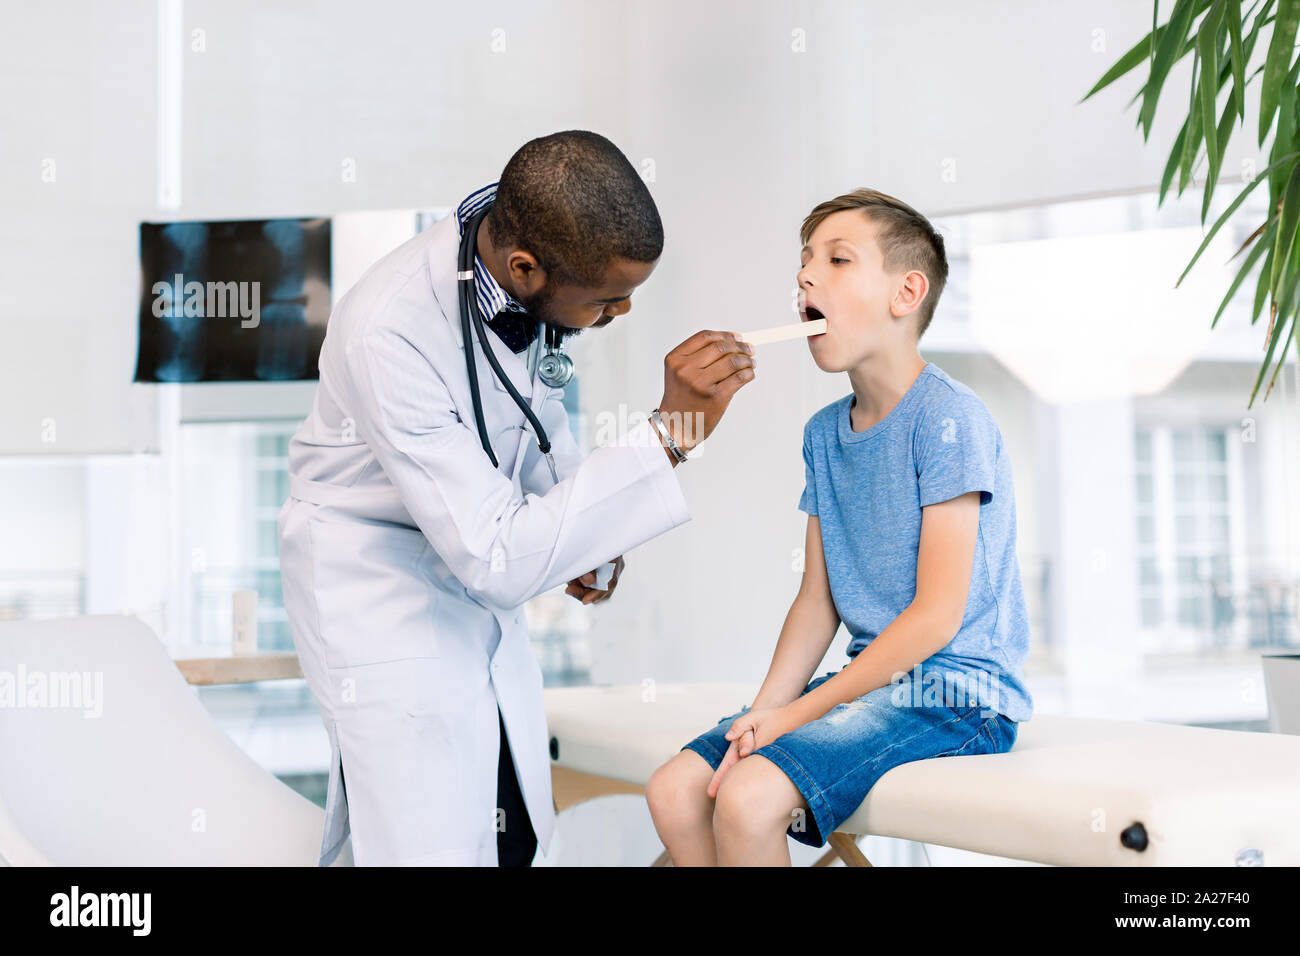 Little throat. Мальчик показывает горло врачу. Мальчик показывает горло картинка.